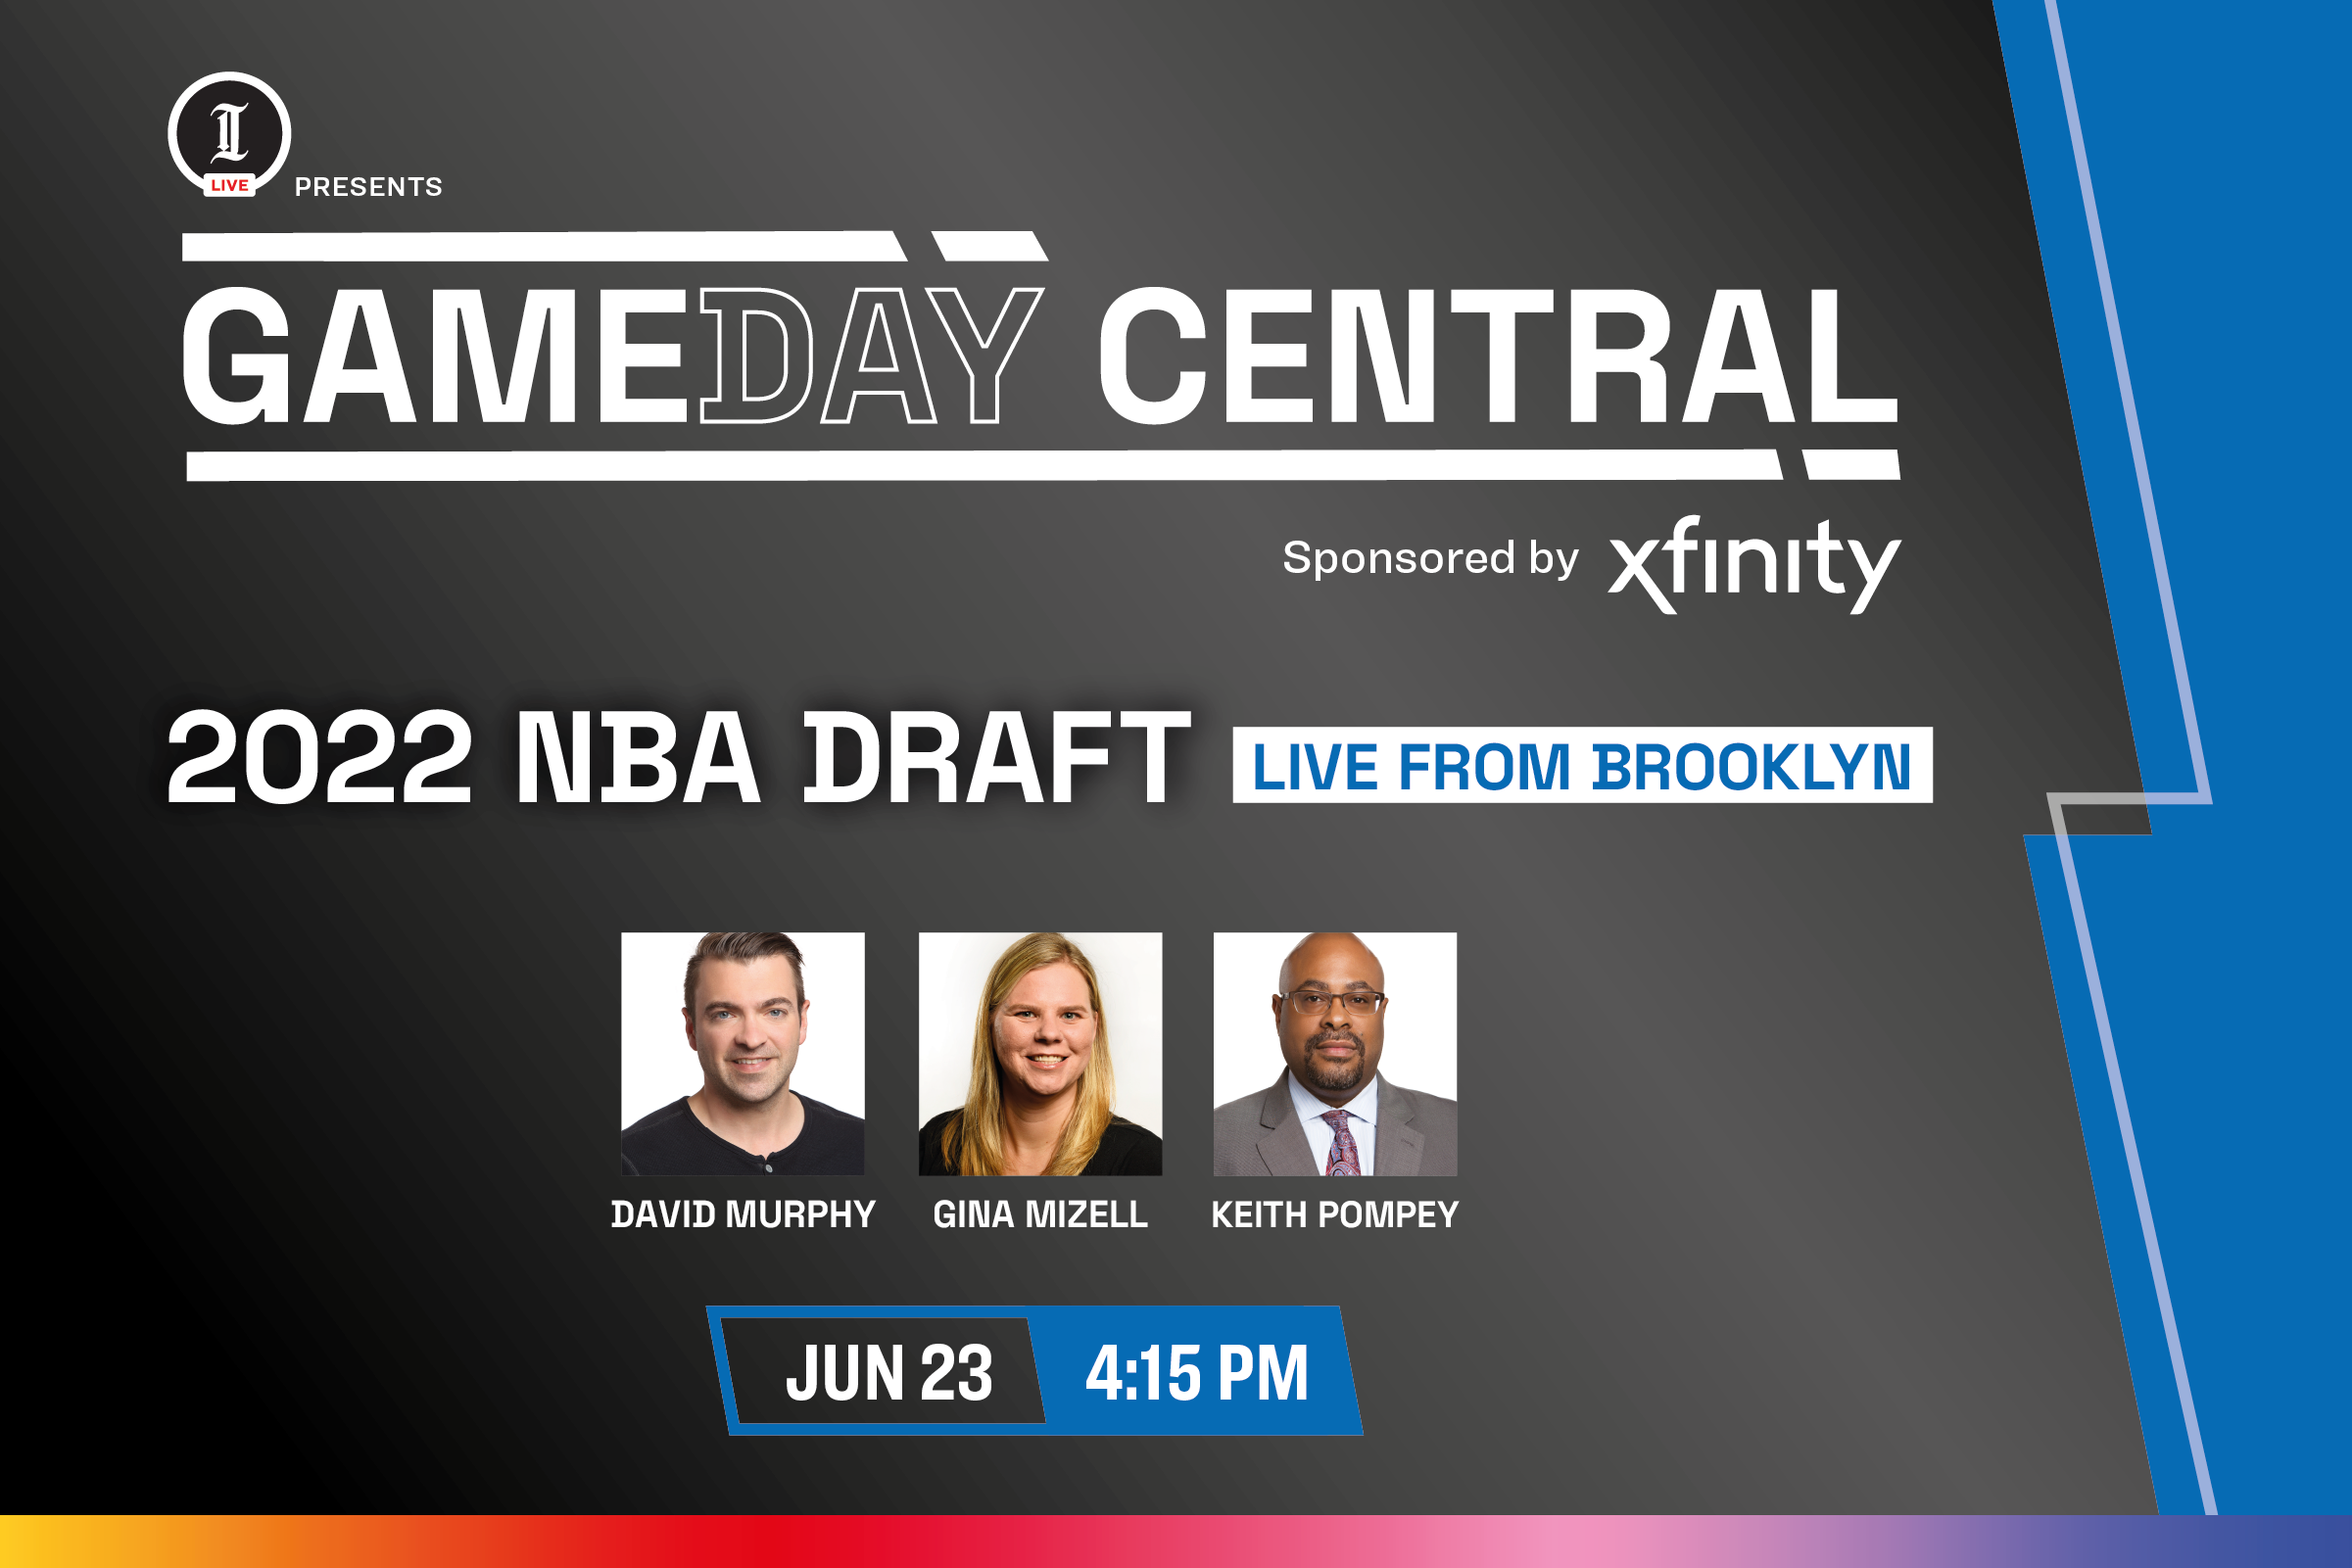 Gameday Central 2022 NBA Draft Sponsored by Xfinity